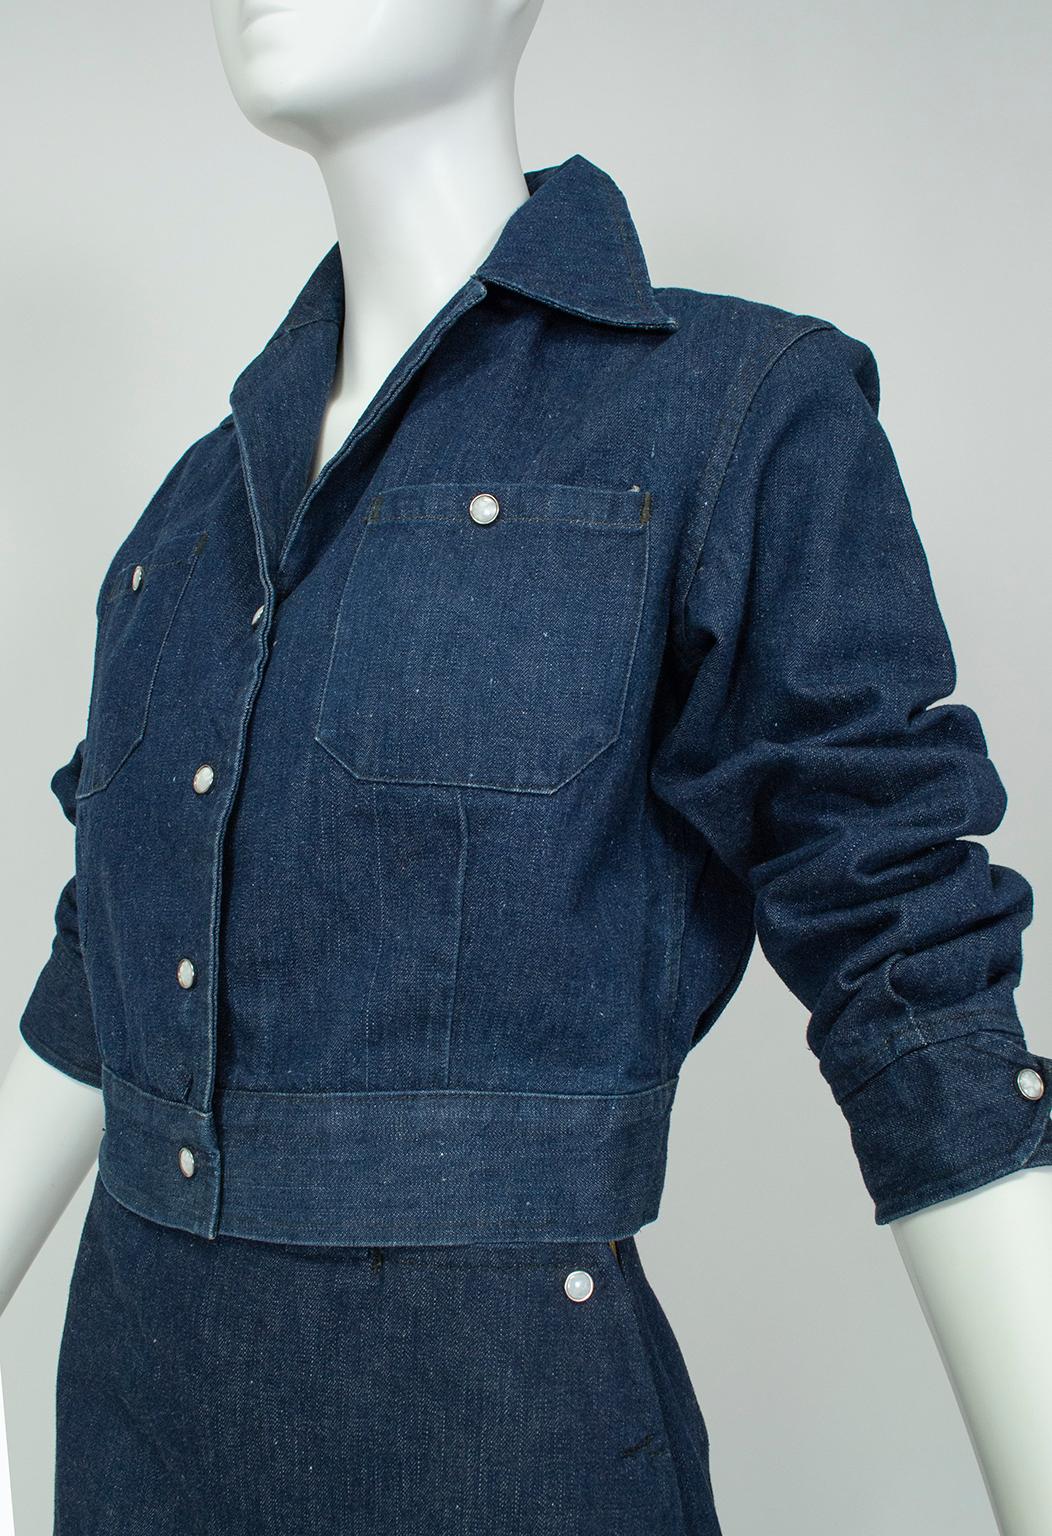 Black Levi Strauss Ranch Wear Western Denim Jacket and Jeans Ensemble – S, 1950s